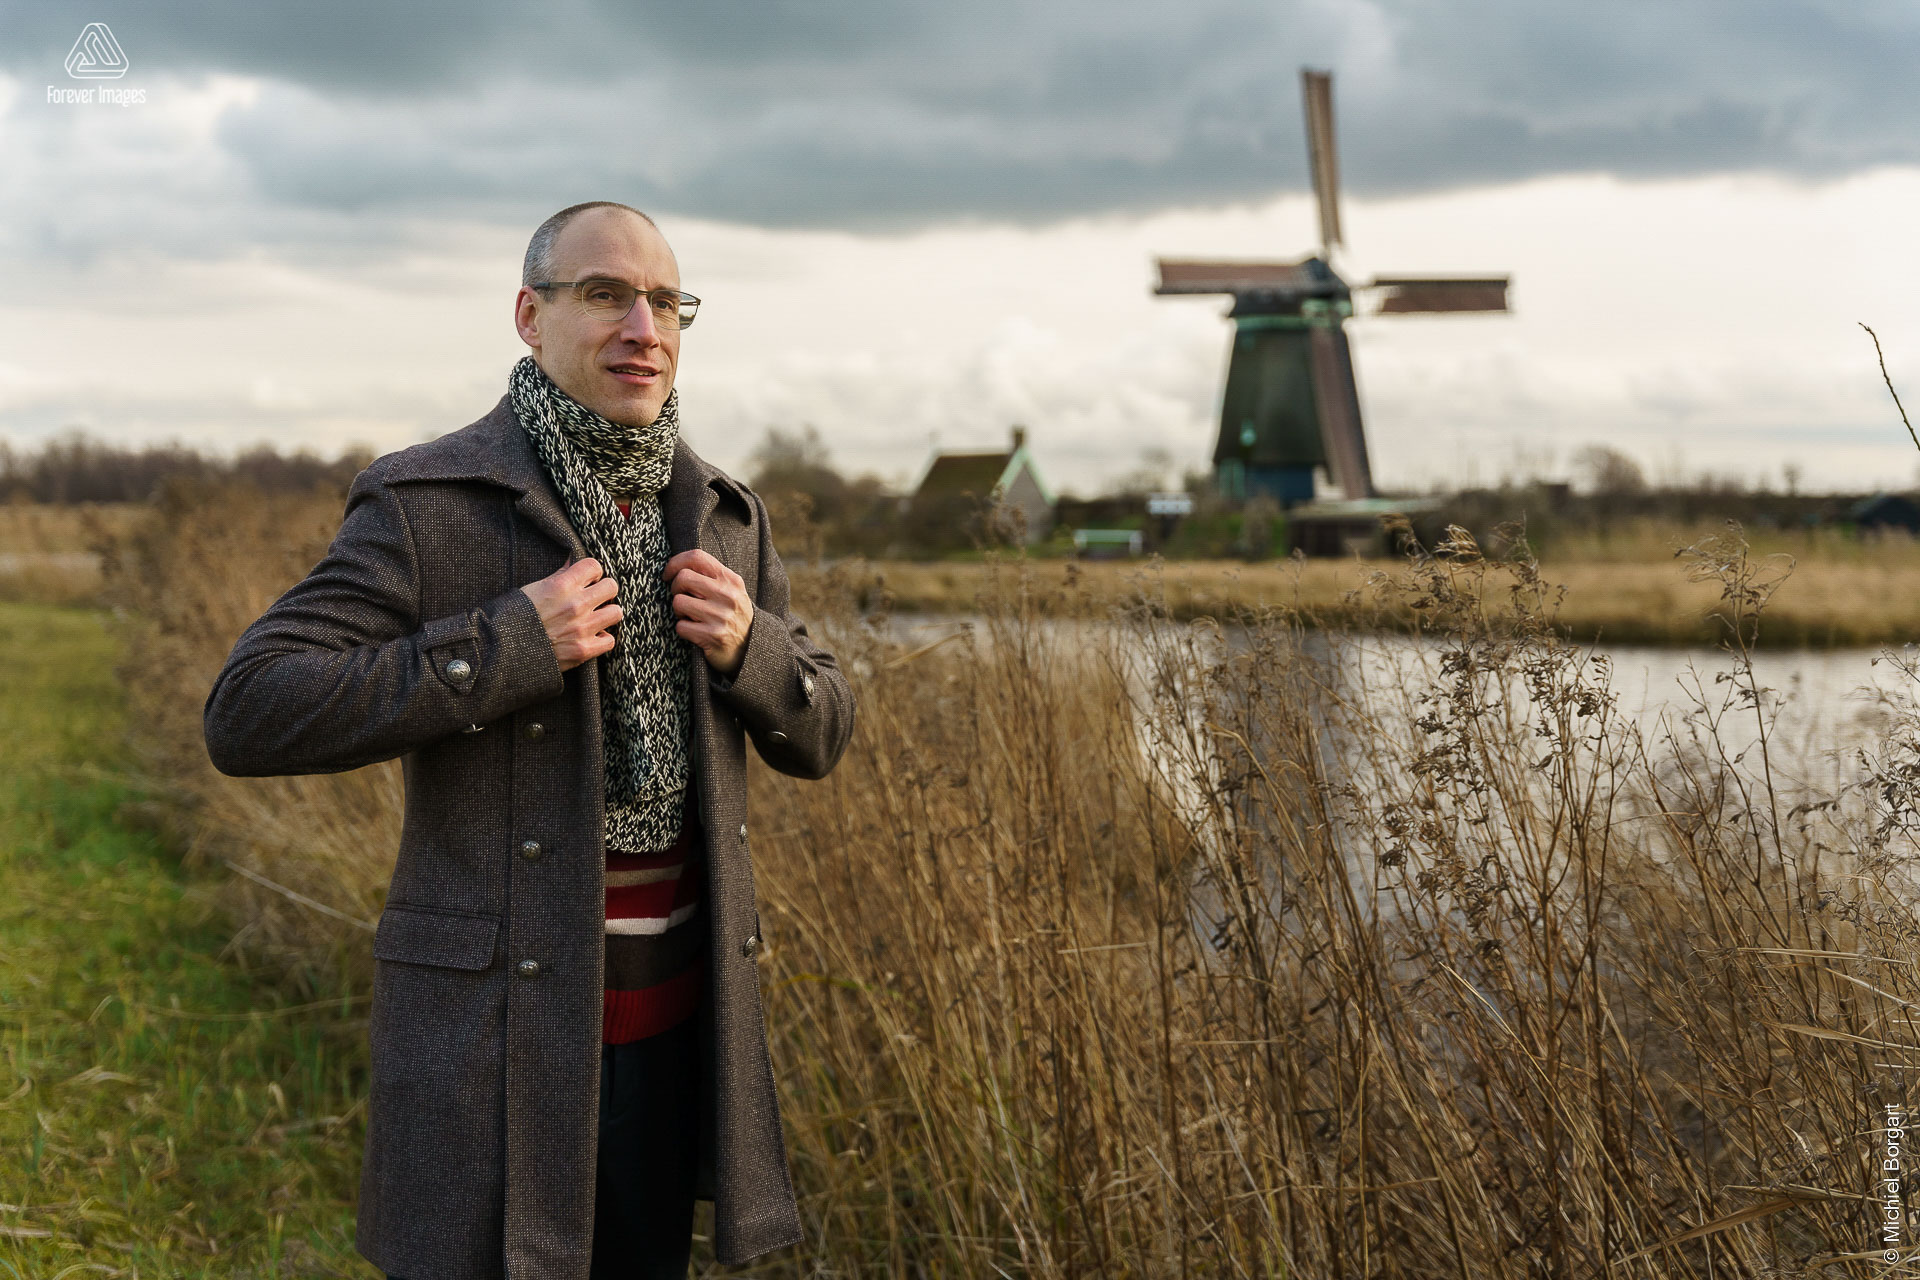 Portrait photo man winter coat scarf at water and Dutch windmill | Robin Het Twiske De Stootersplas Twiskemolen | Portrait Photographer Michiel Borgart - Forever Images.